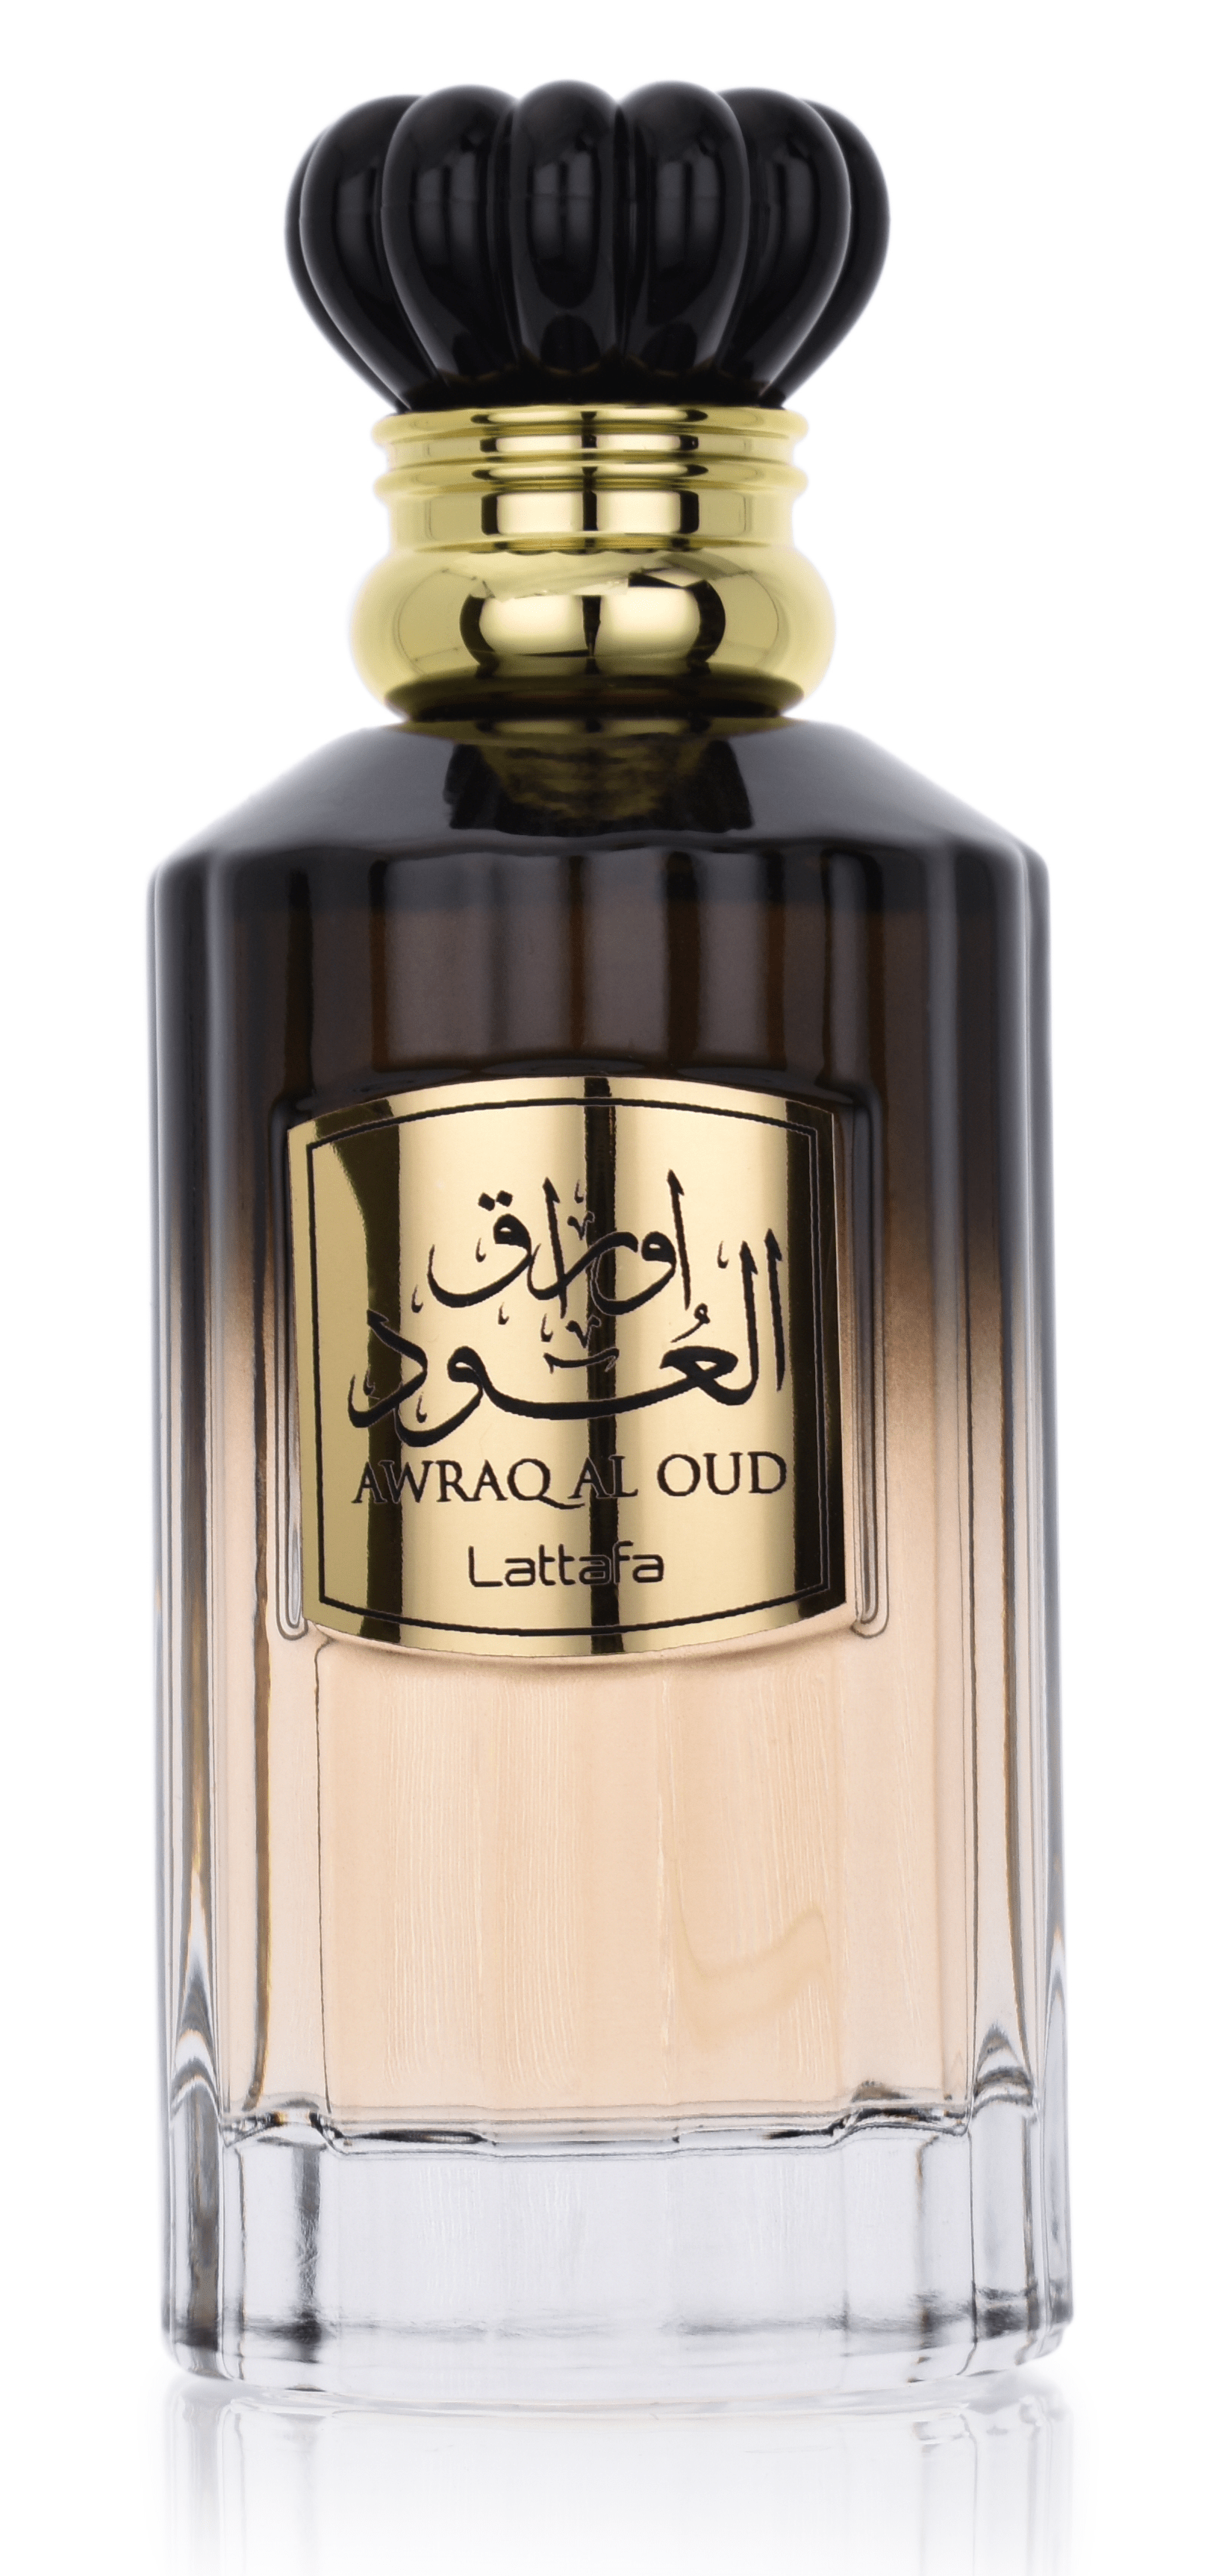 Lattafa Awraq al Oud 100 ml Eau de Parfum           